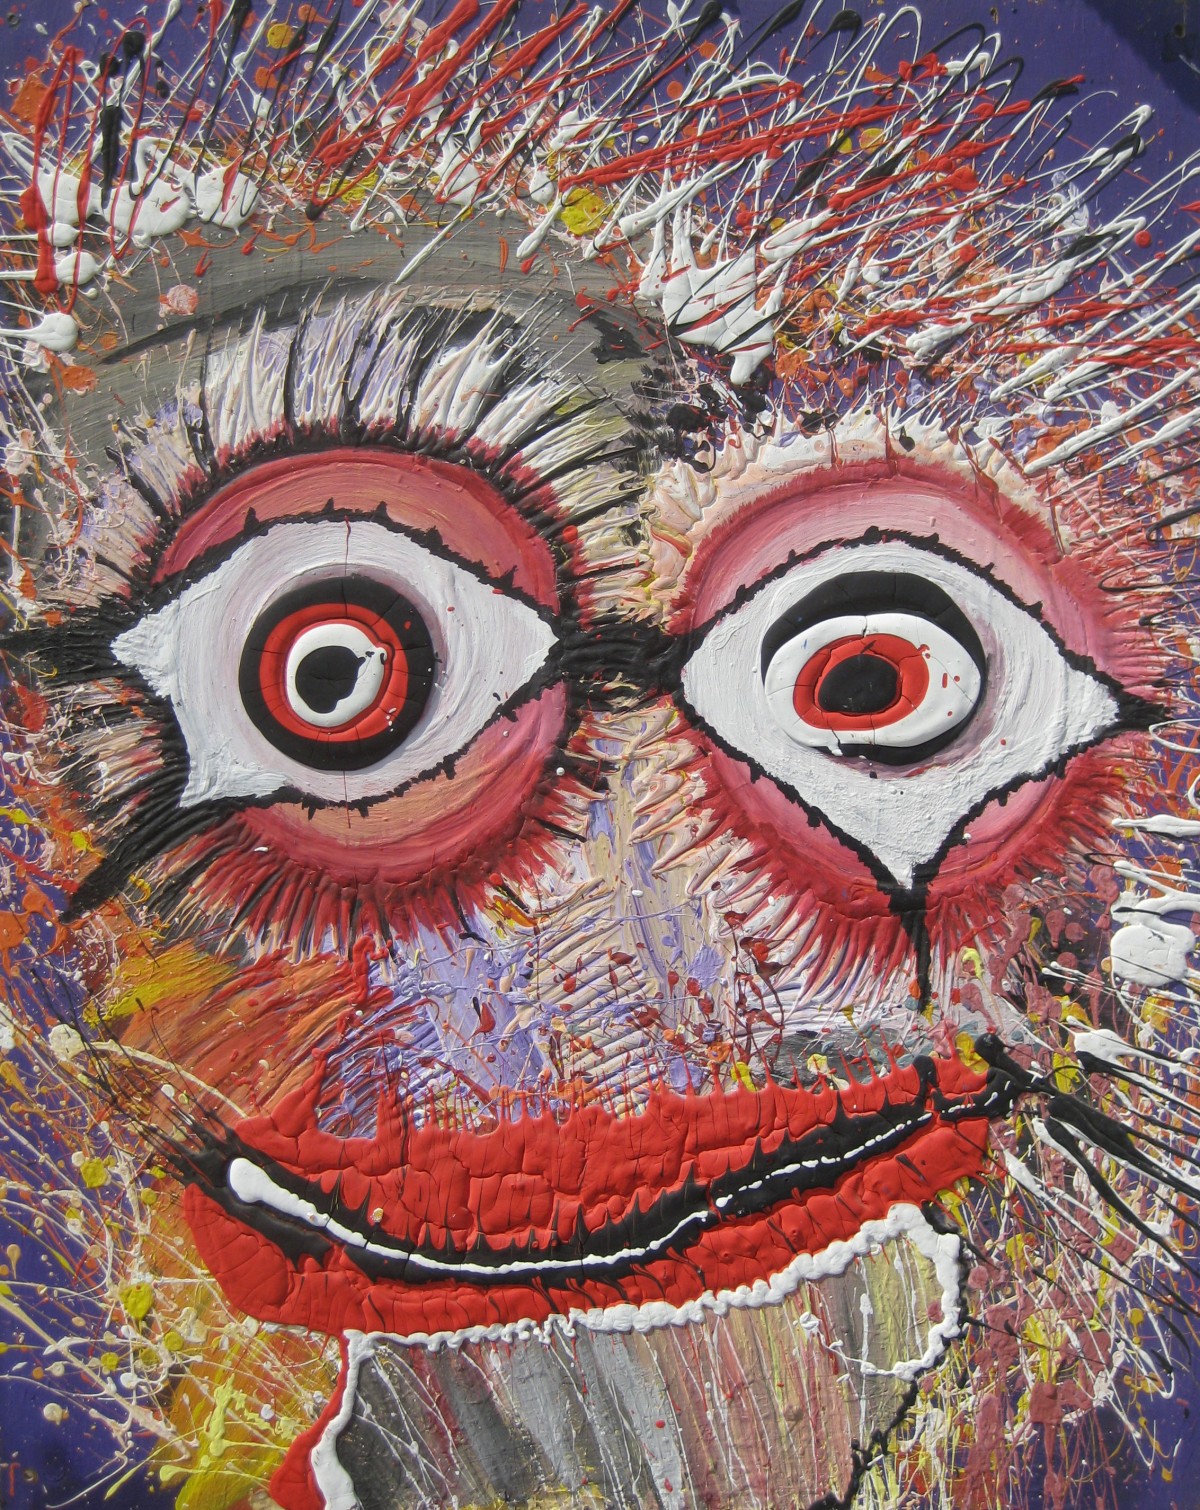 Monster 100 cm x 80 cm, Acrylat auf Holz gekleckst, 1990